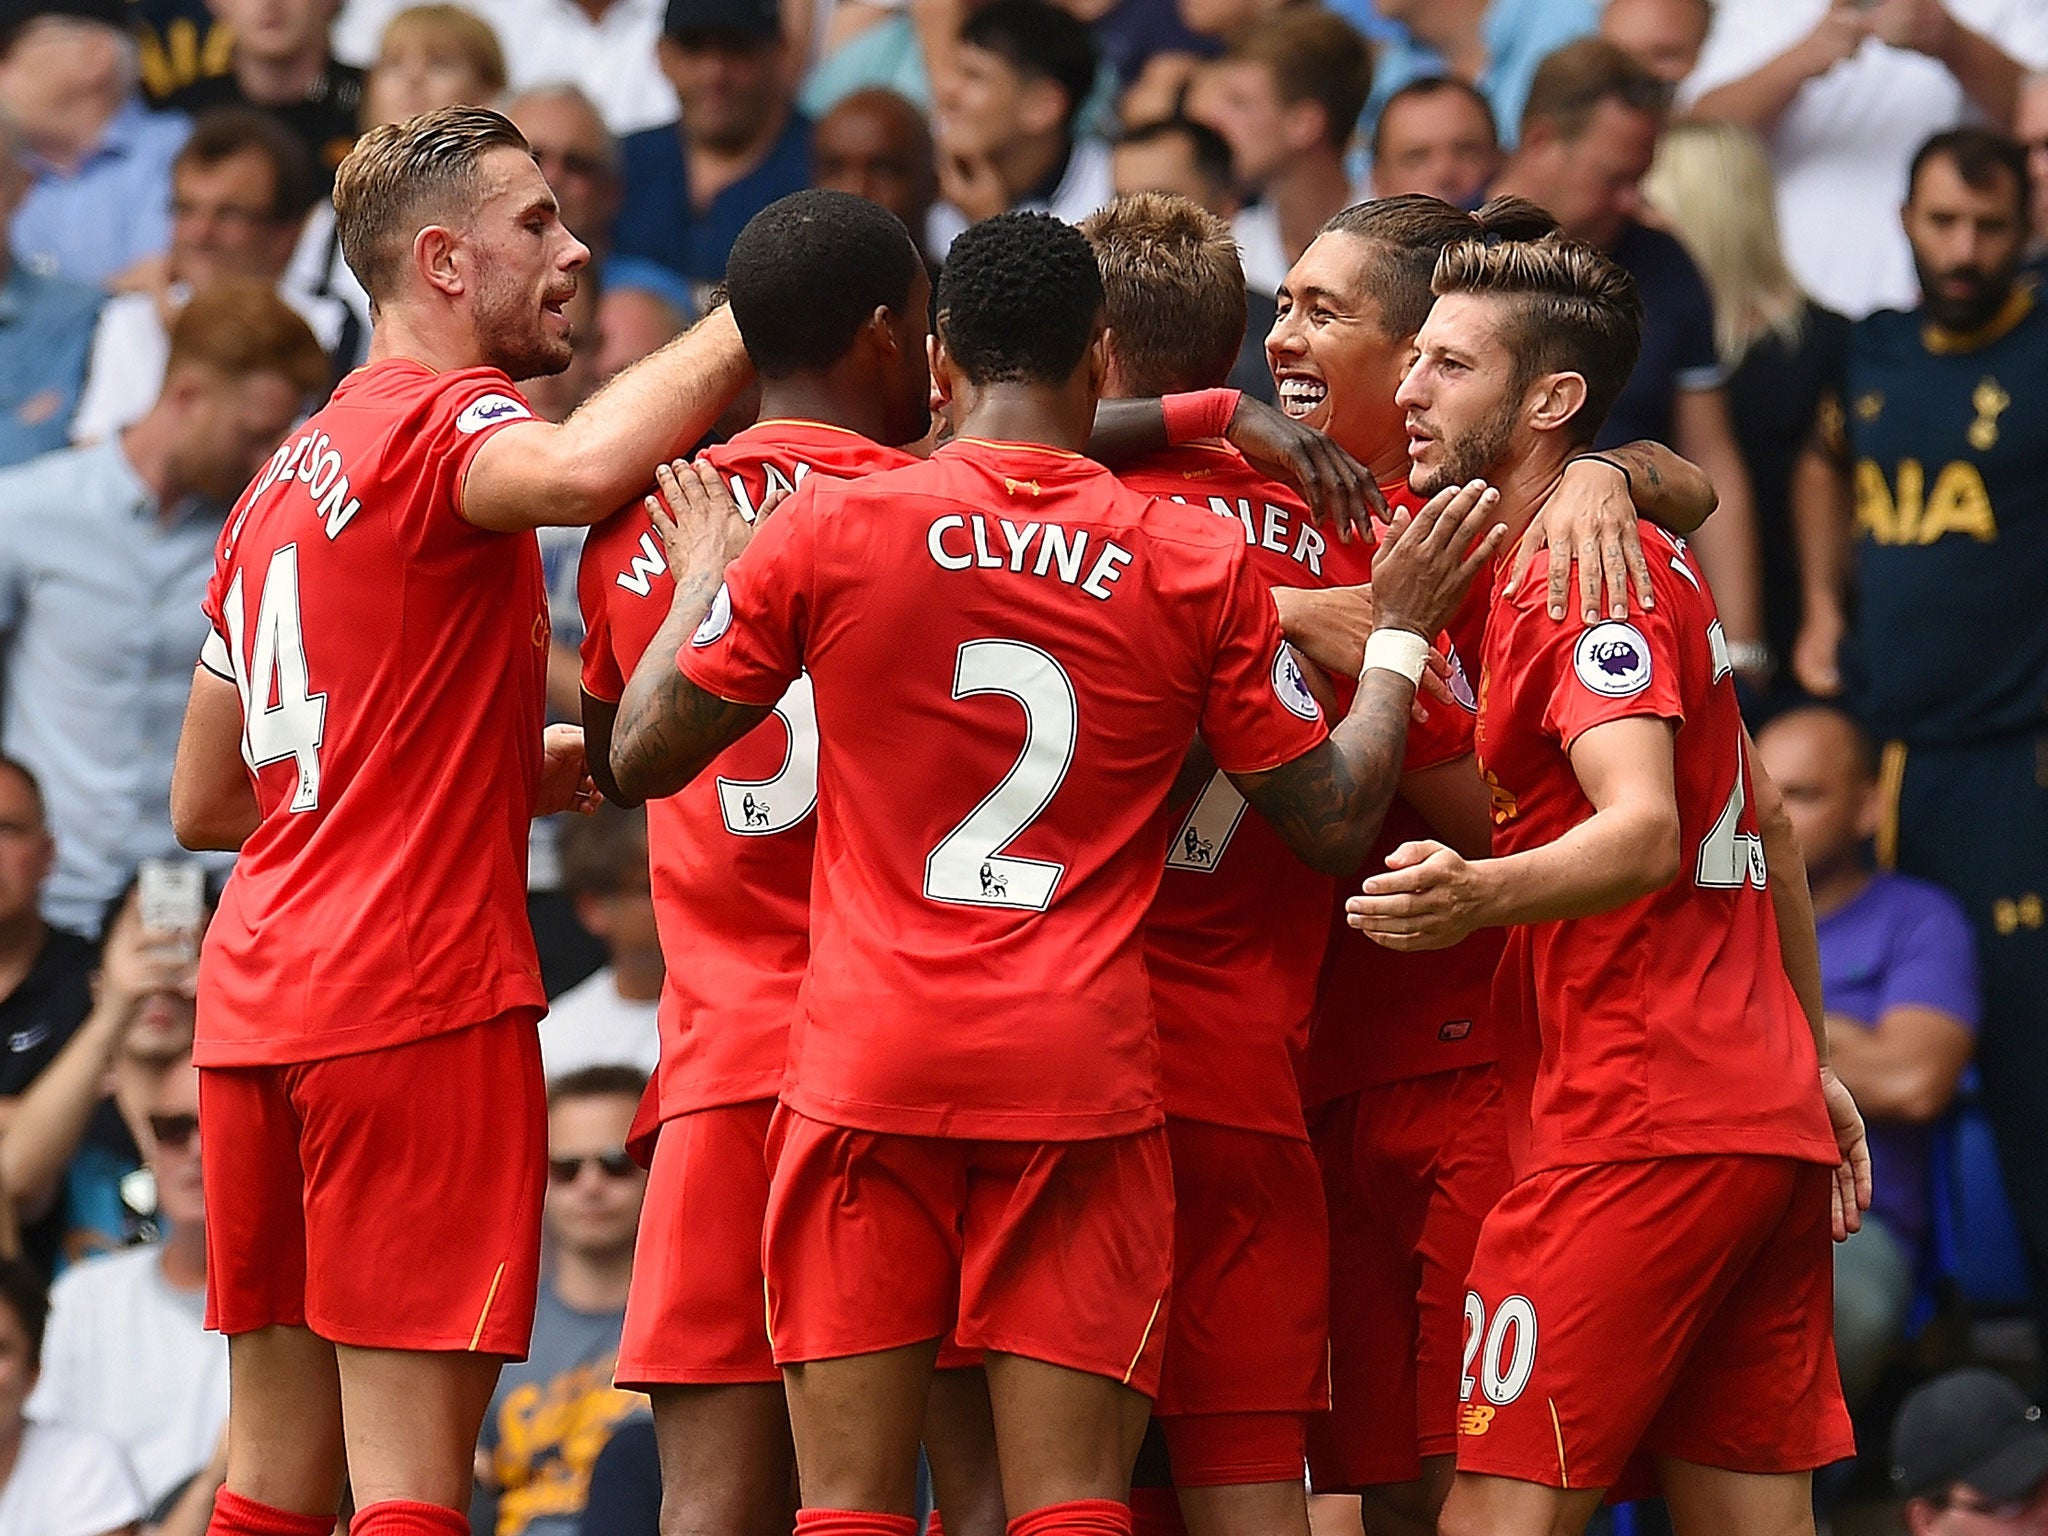 Liverpool drew their last Premier League game 1-1 against Tottenham